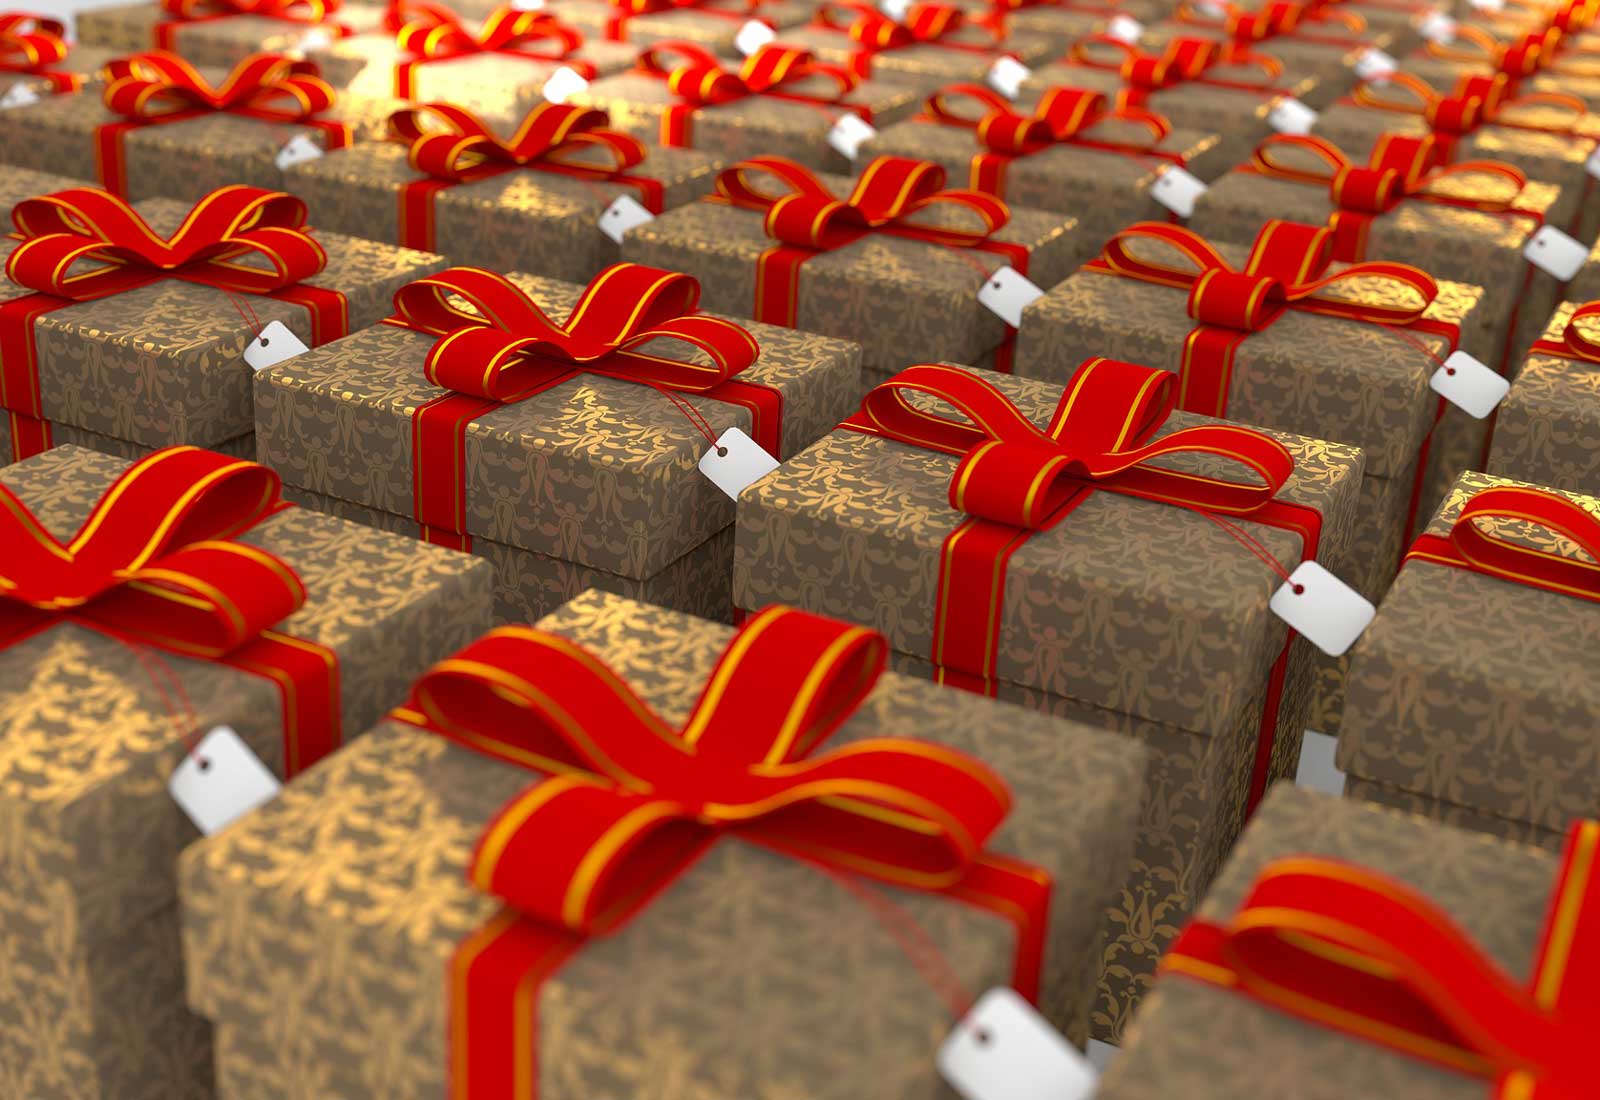 Conquistador Edredón Adaptado Escoger cajas decoradas para regalos | Comercial Avilés | Comercial Avilés